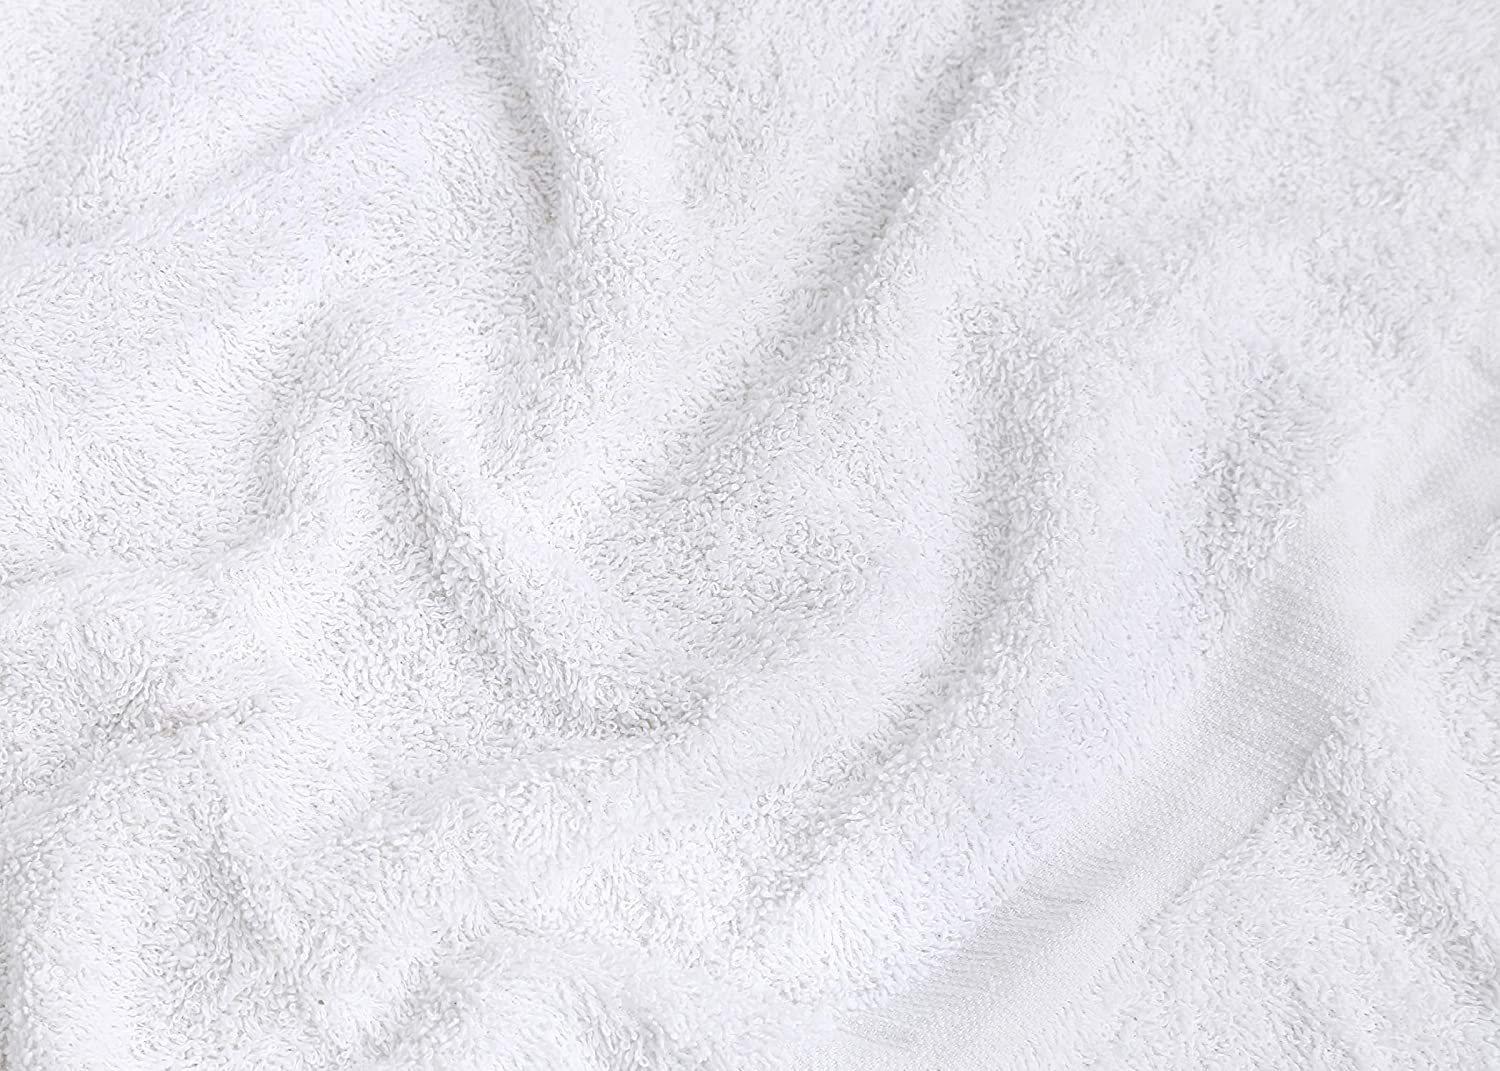 Hand Towels-24 Pack-Green, Super Absorbent Ring SPUN, 100% Cotton,(Size 16x27), Commercial Grade, Multipurpose, Gym-Spa-Salon Towel, 3 lbs. per Dozen